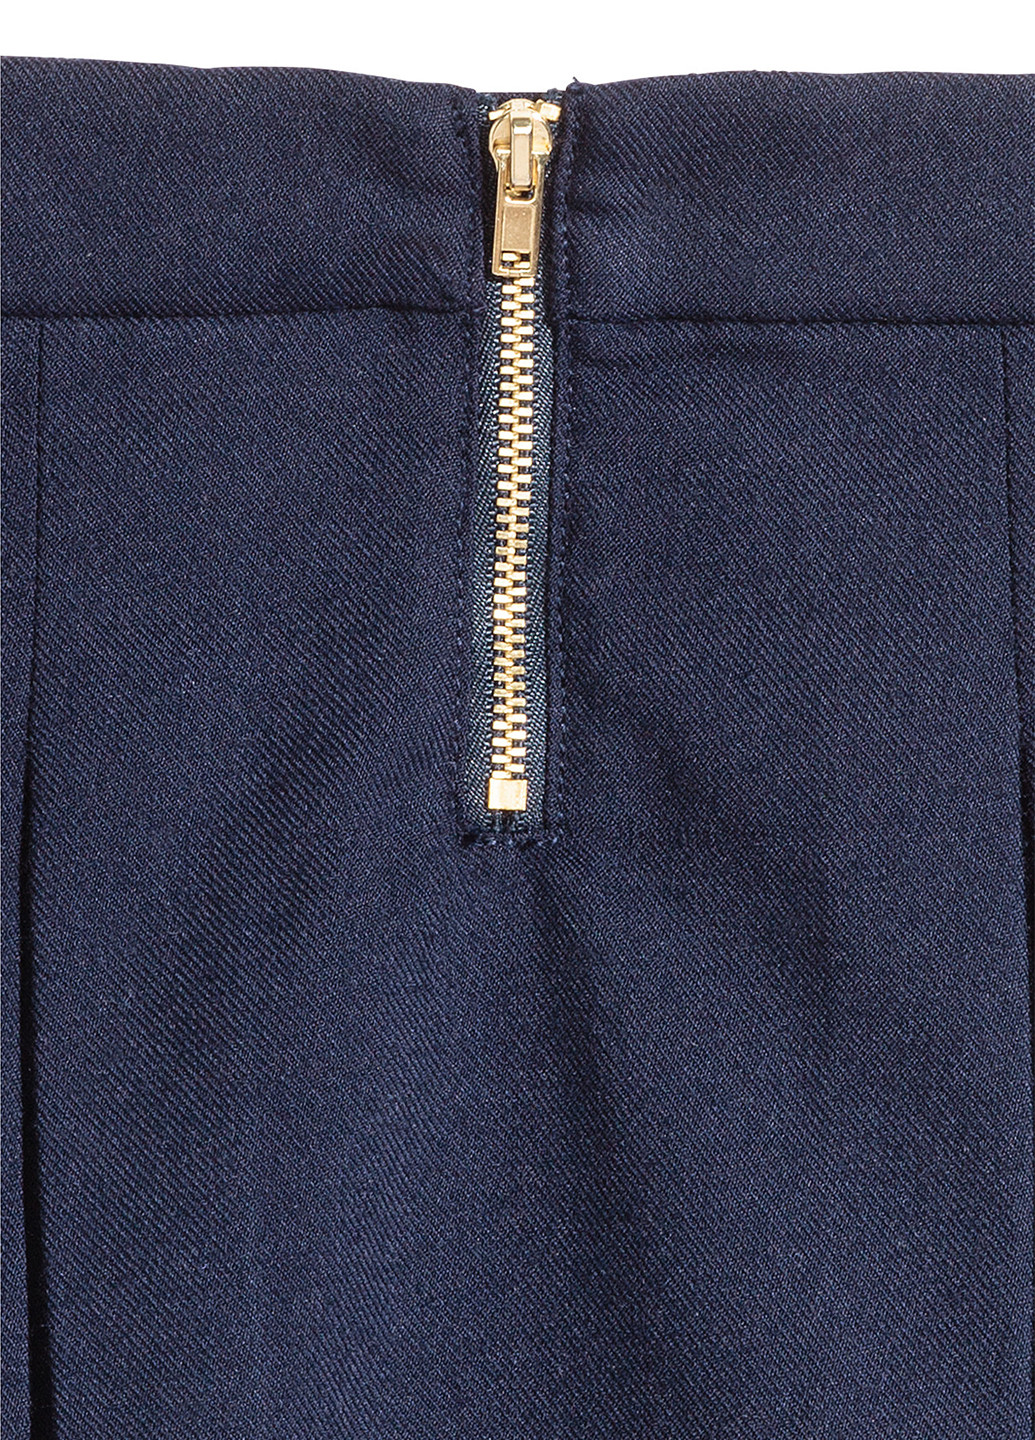 Темно-синяя офисная однотонная юбка H&M мини